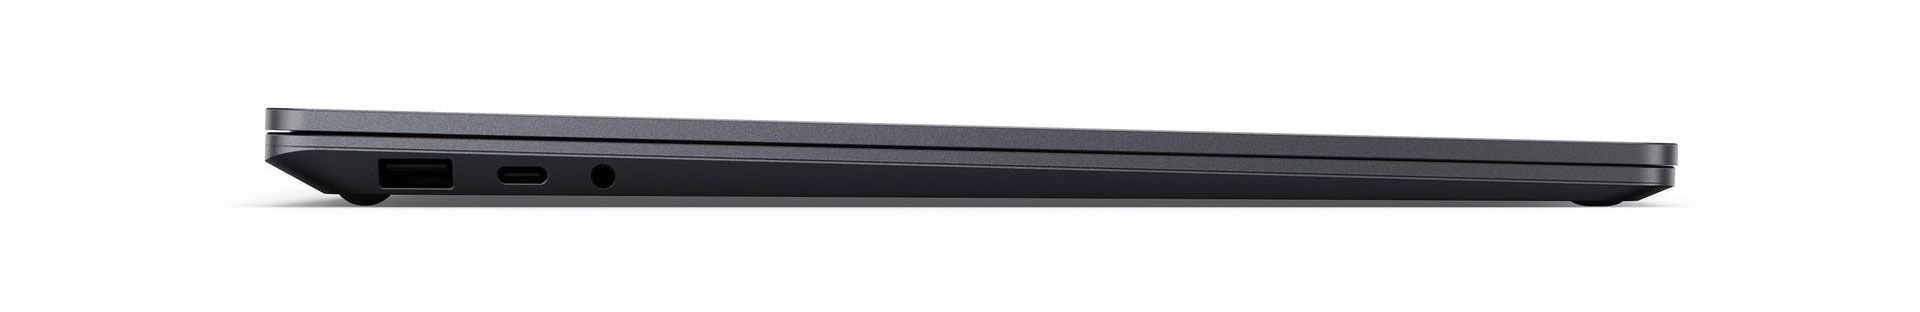 Surface-Laptop-3-15-inch-mb-v10